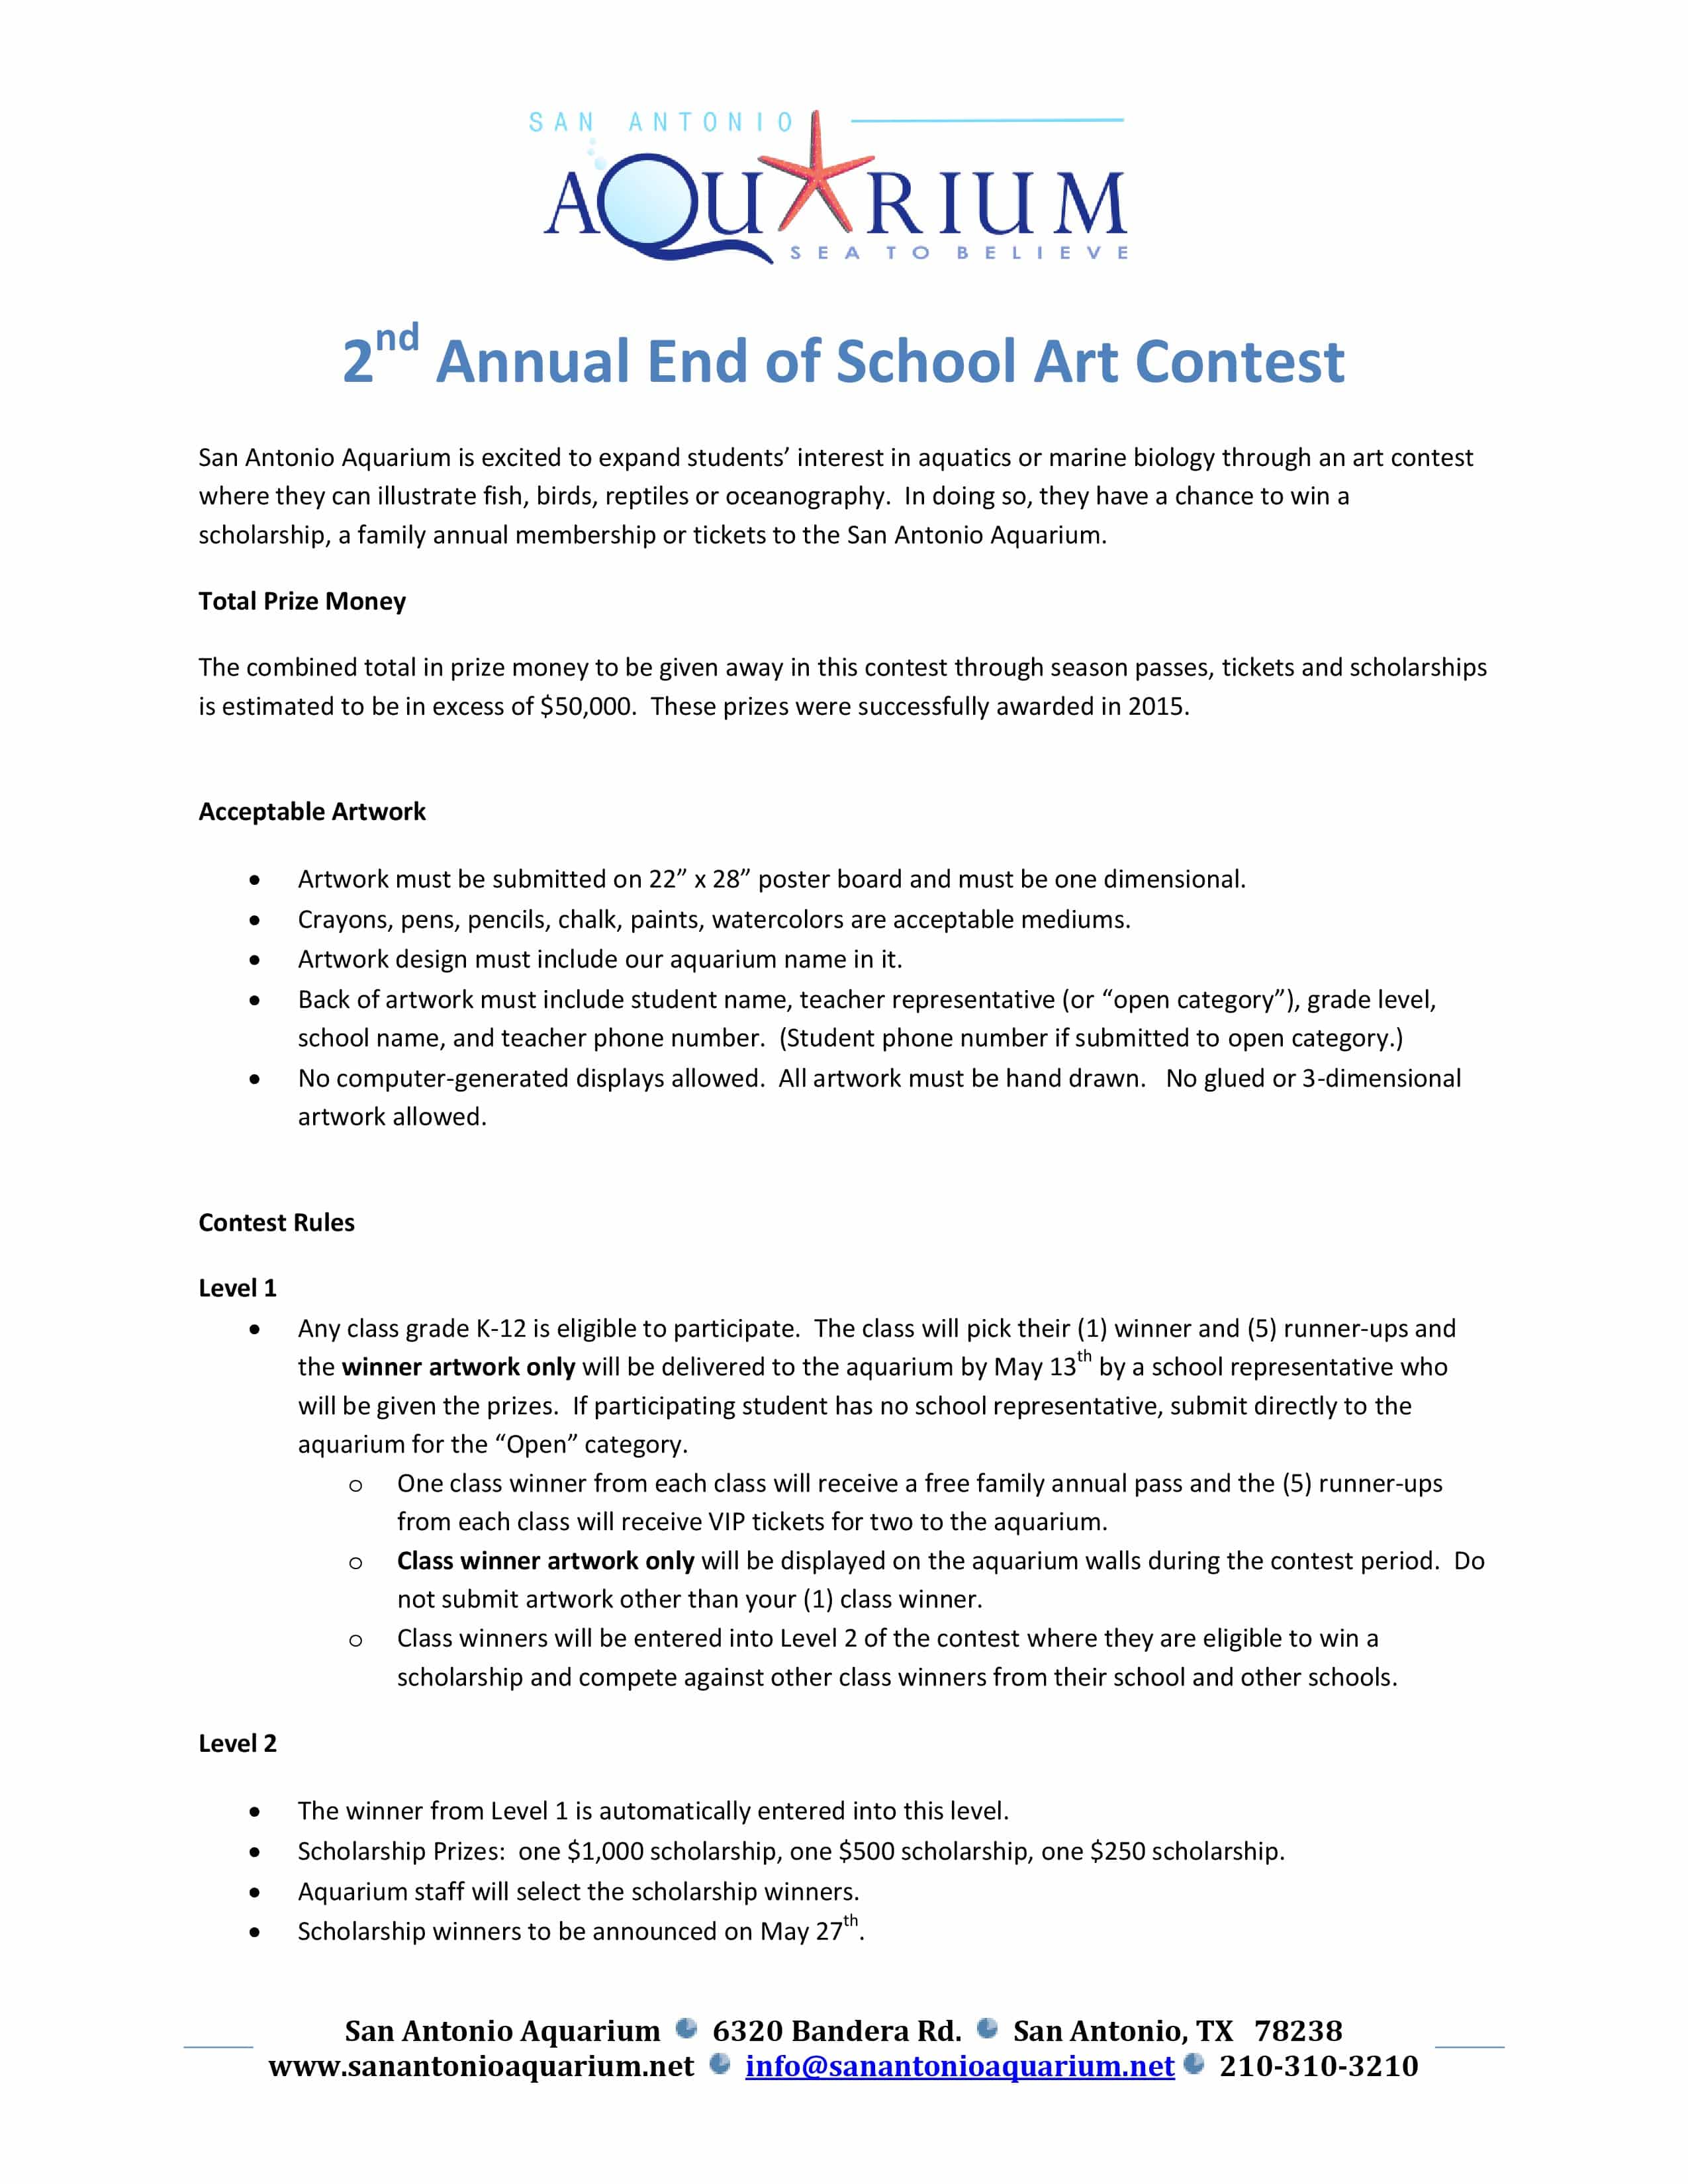 End of School Art Contest School Scholarship Artwork Contest-SAA-2016